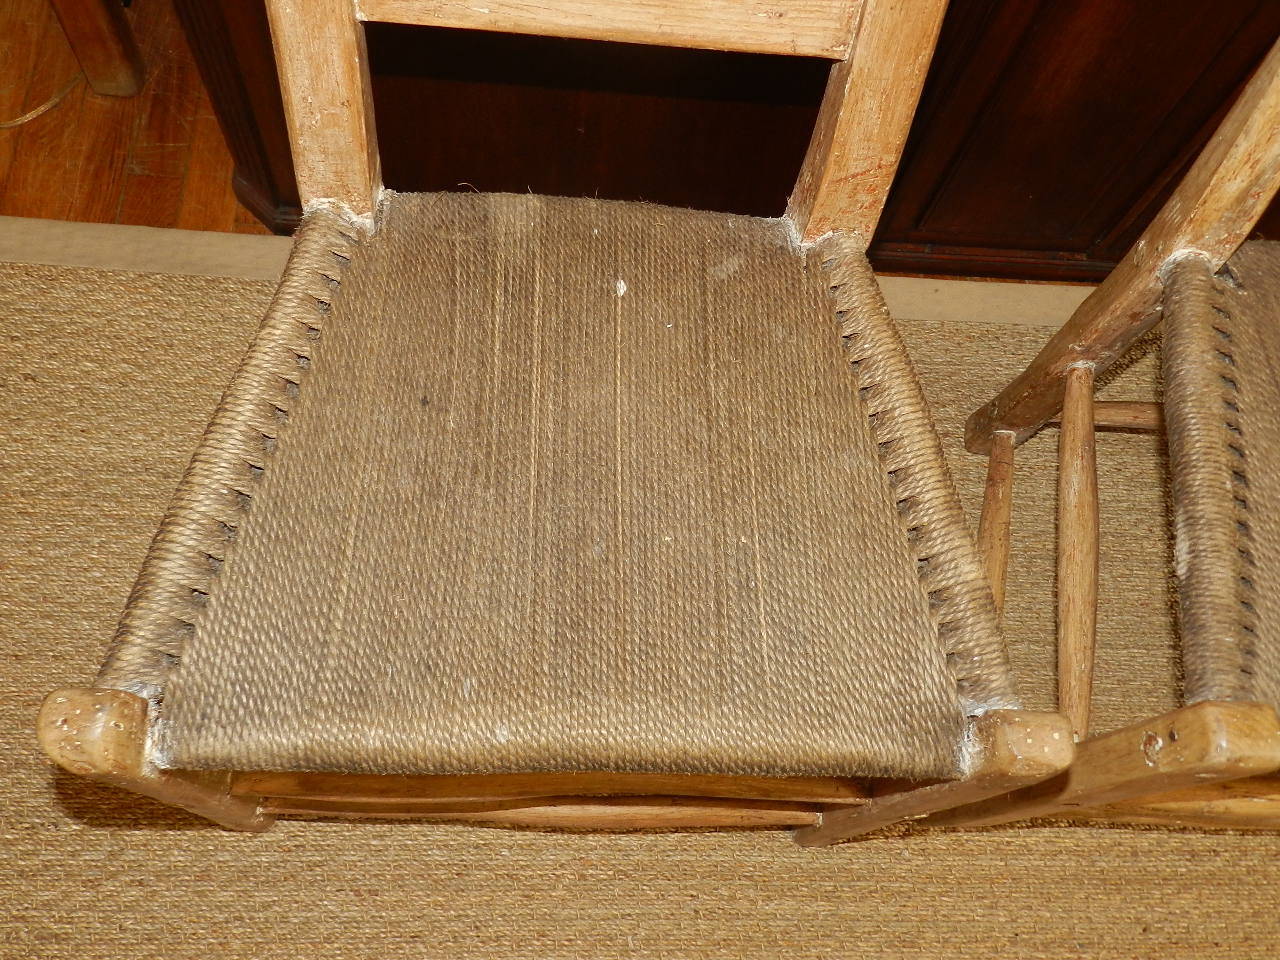 Pair of handmade Scottish island chairs with rope seats.